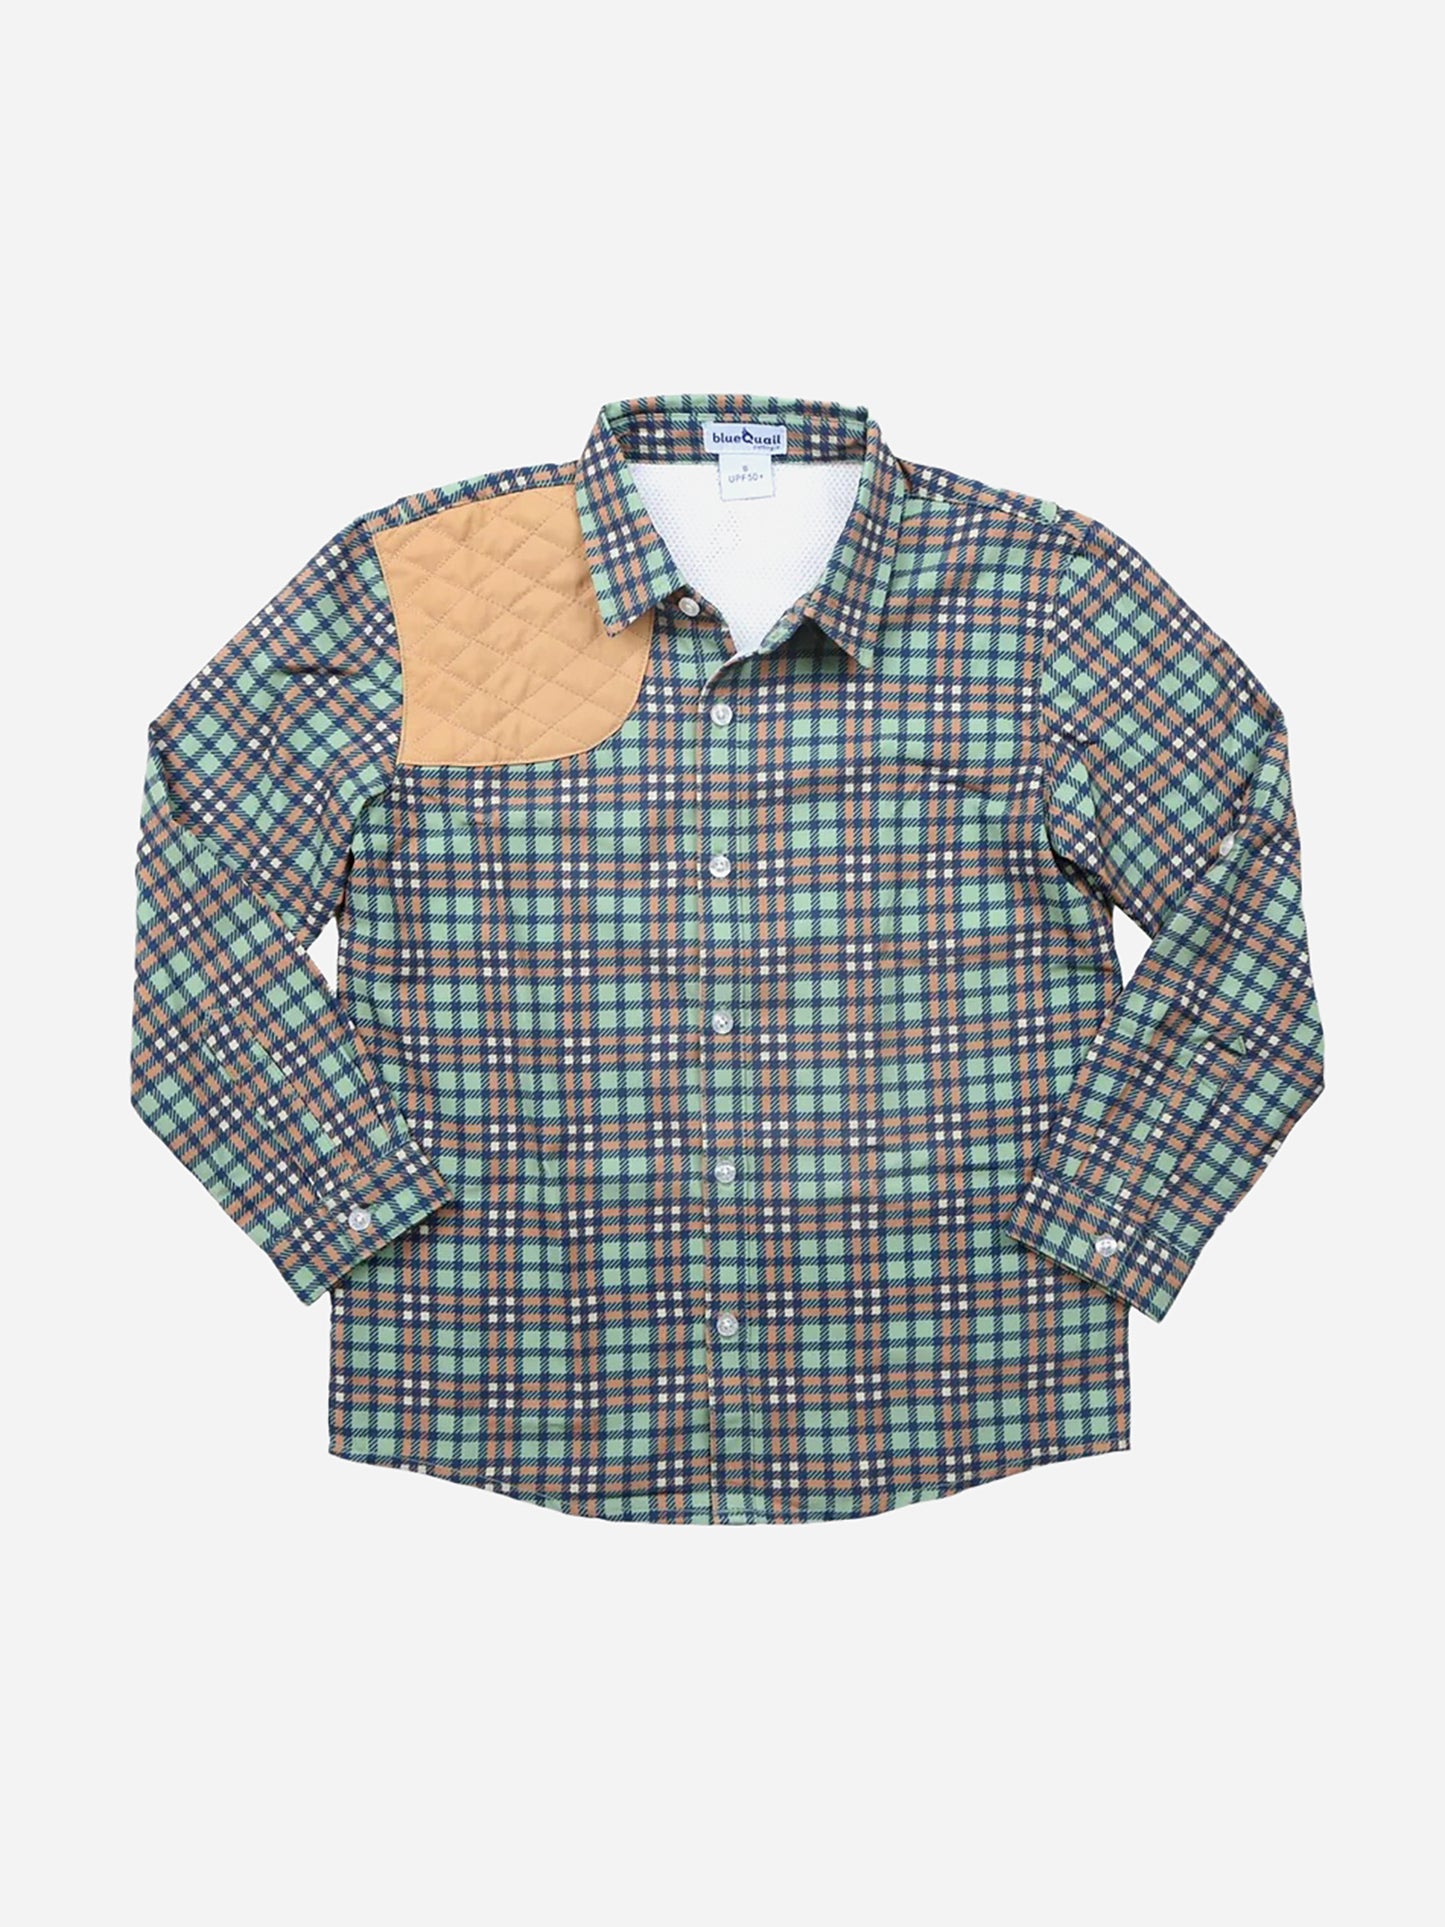 Blue Quail Boys' Ranch Collection Long Sleeve Shirt